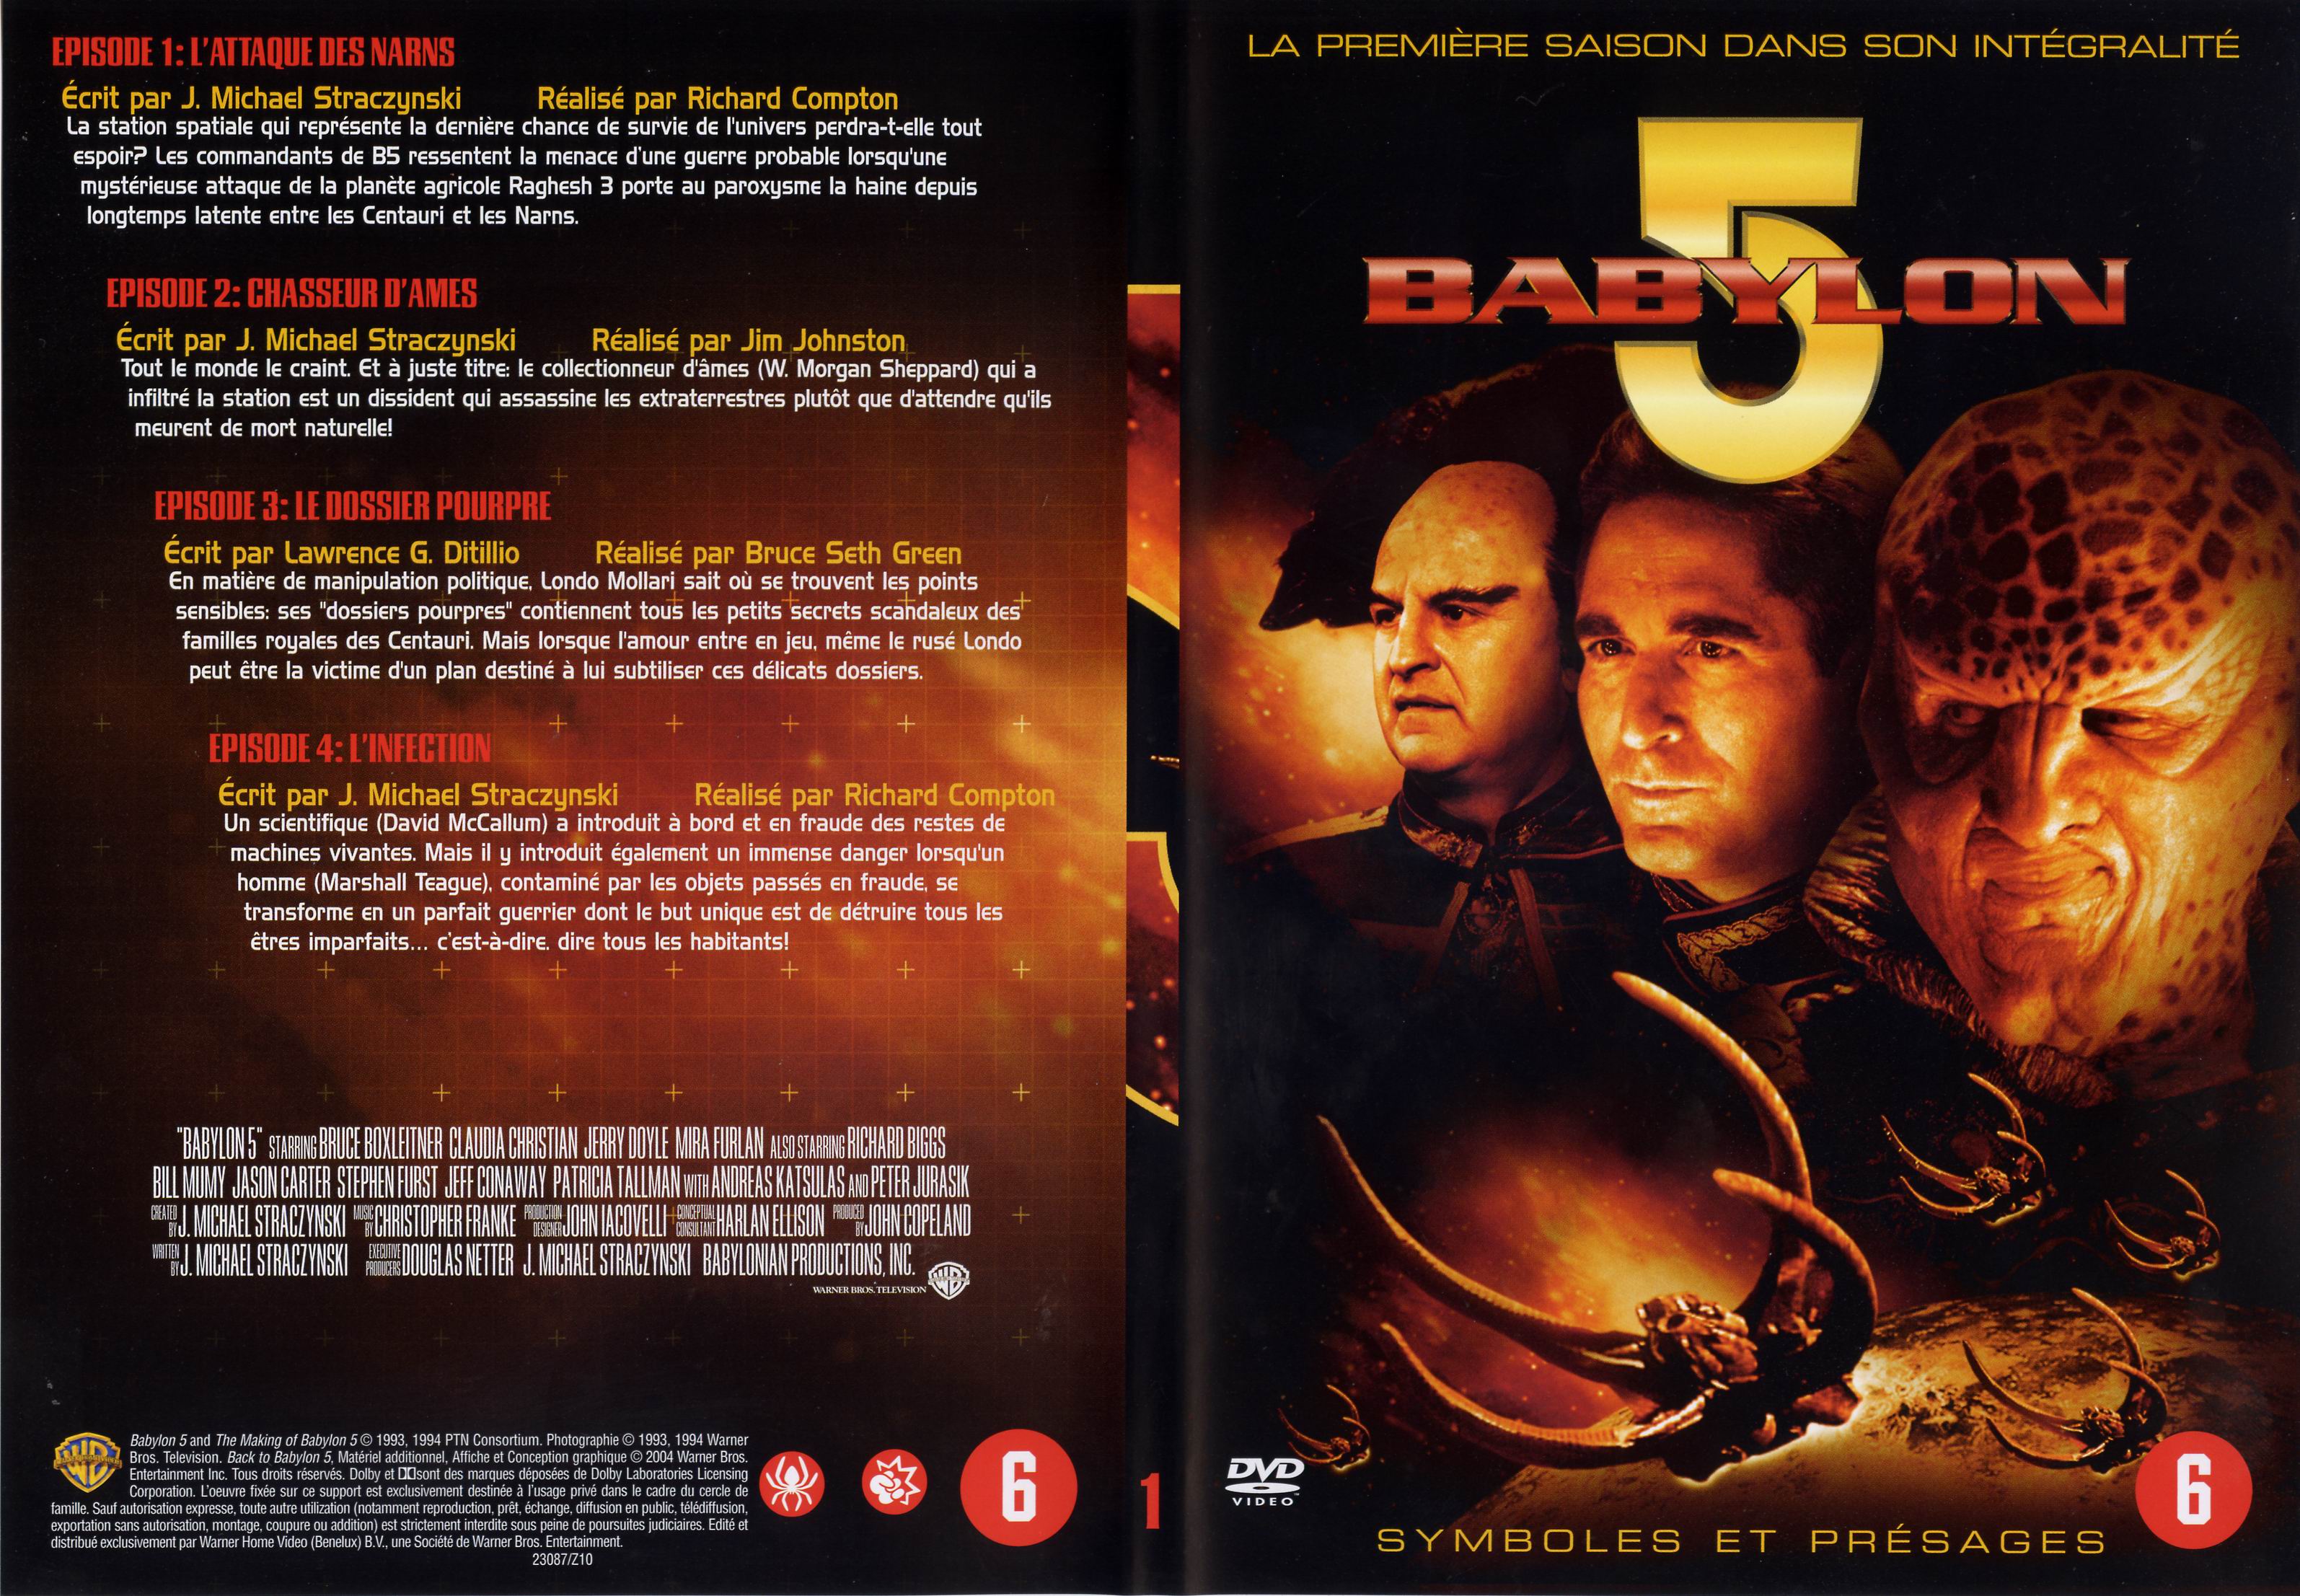 Jaquette DVD Babylon 5 saison 1 dvd 1